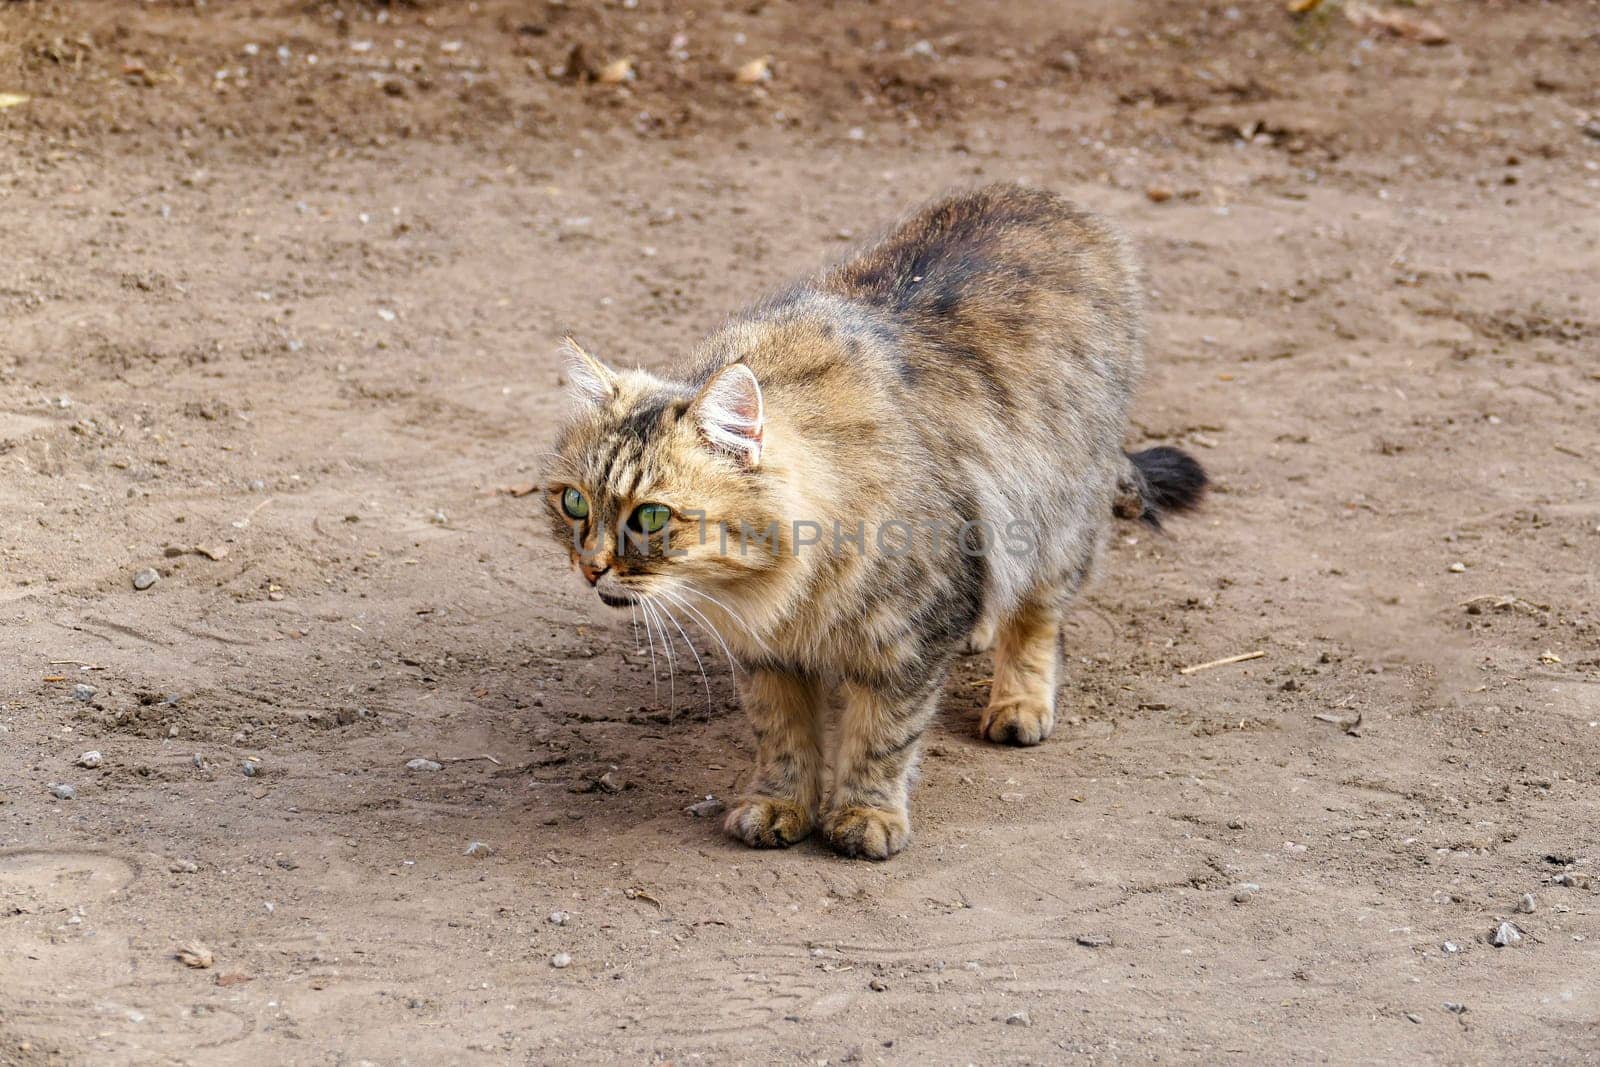 cute hypoallergenic stray cat,siberian cat,Hypoallergenic breed of cat by nhatipoglu